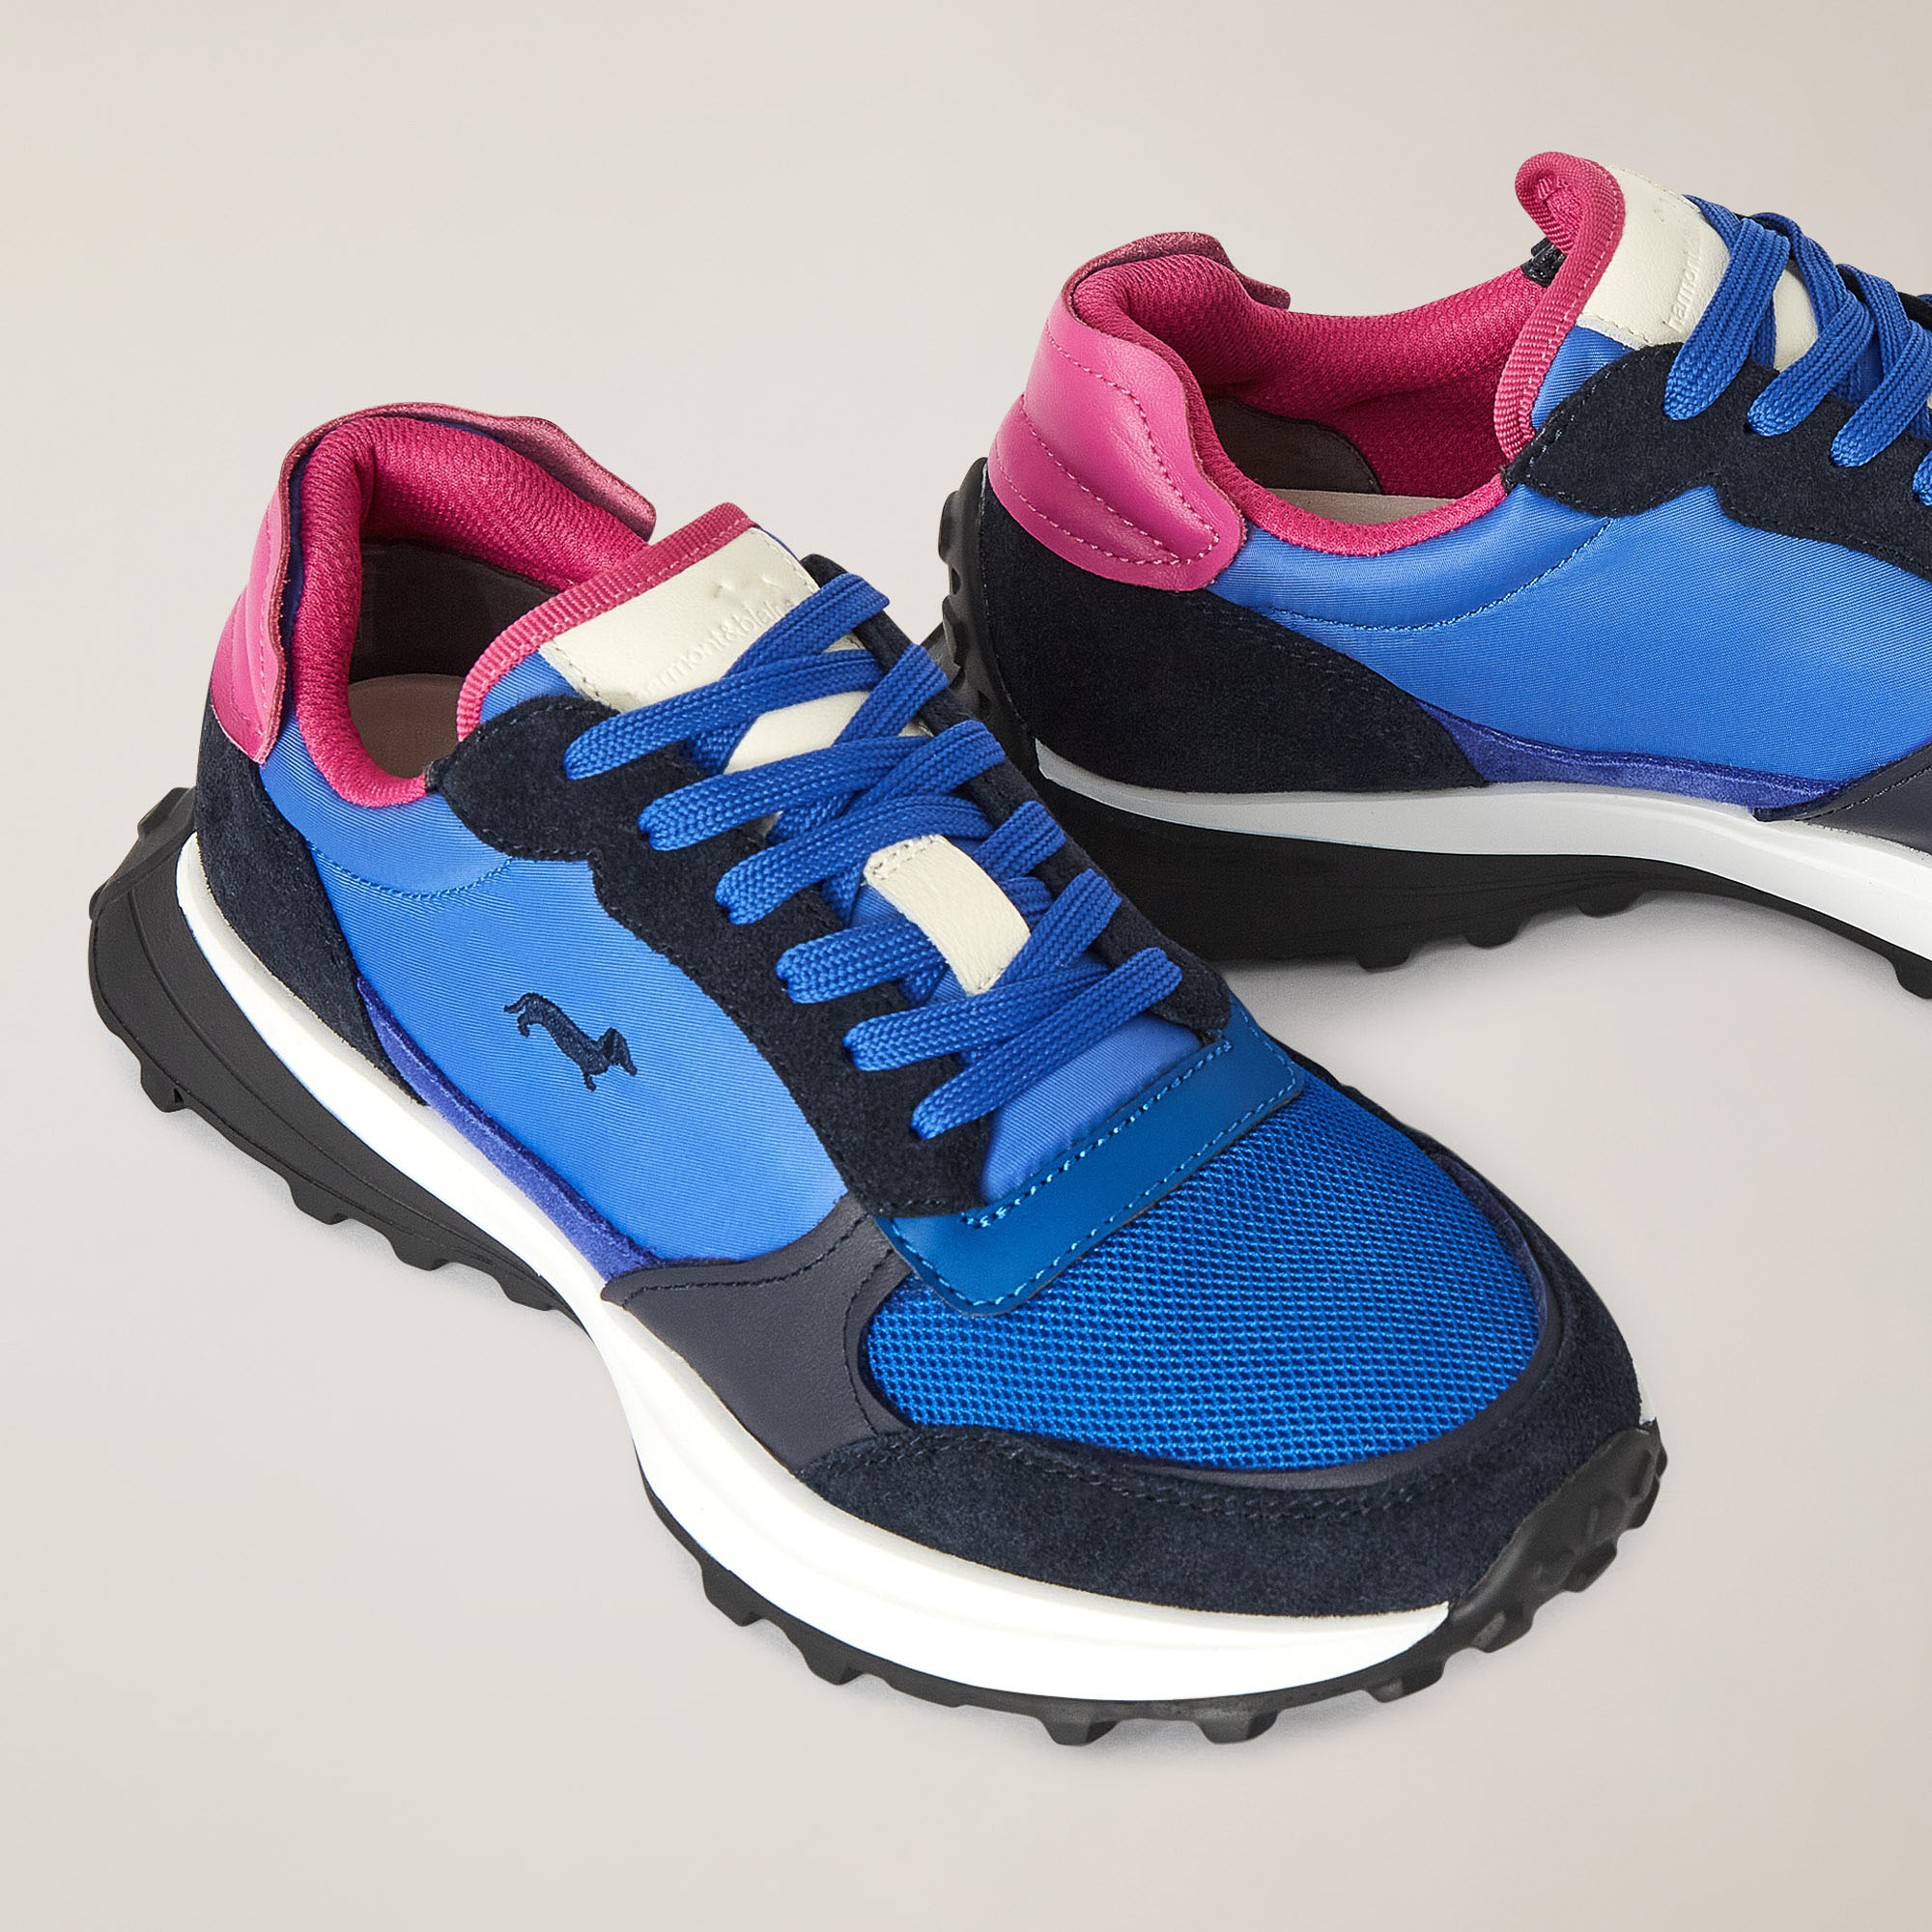 Mixed-Material Ultra Lightweight Running Sneakers, Cobalt blue/Pink, large